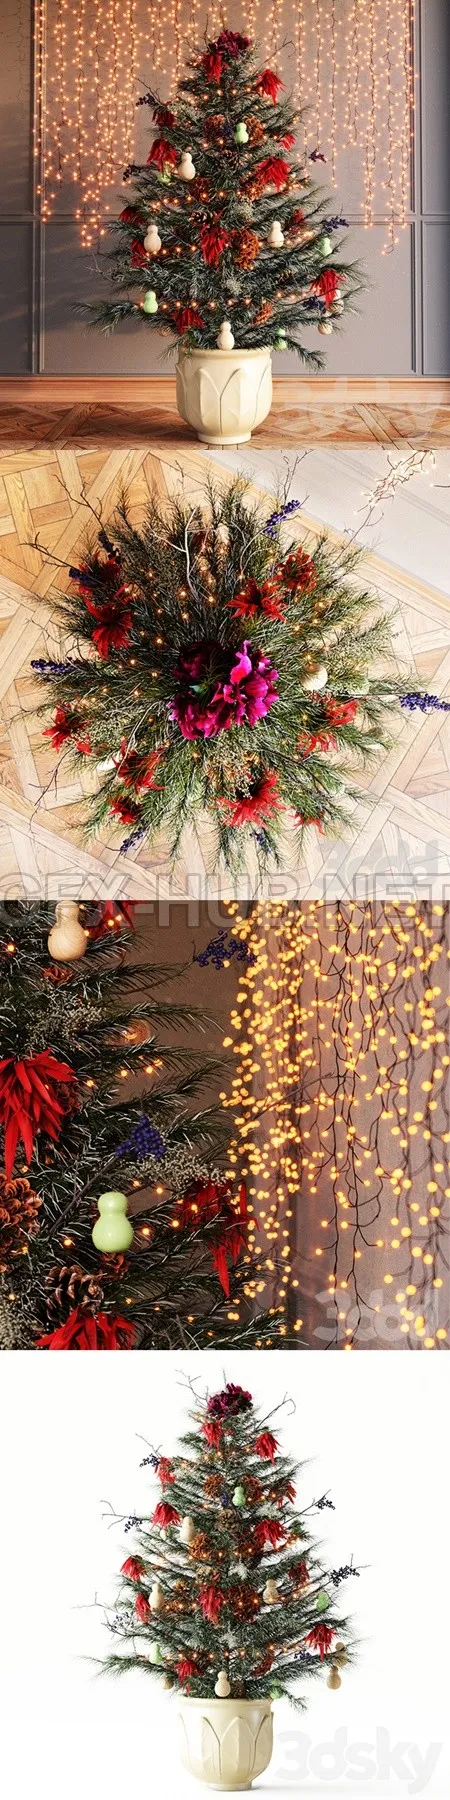 Festive Christmas Tree – 6533